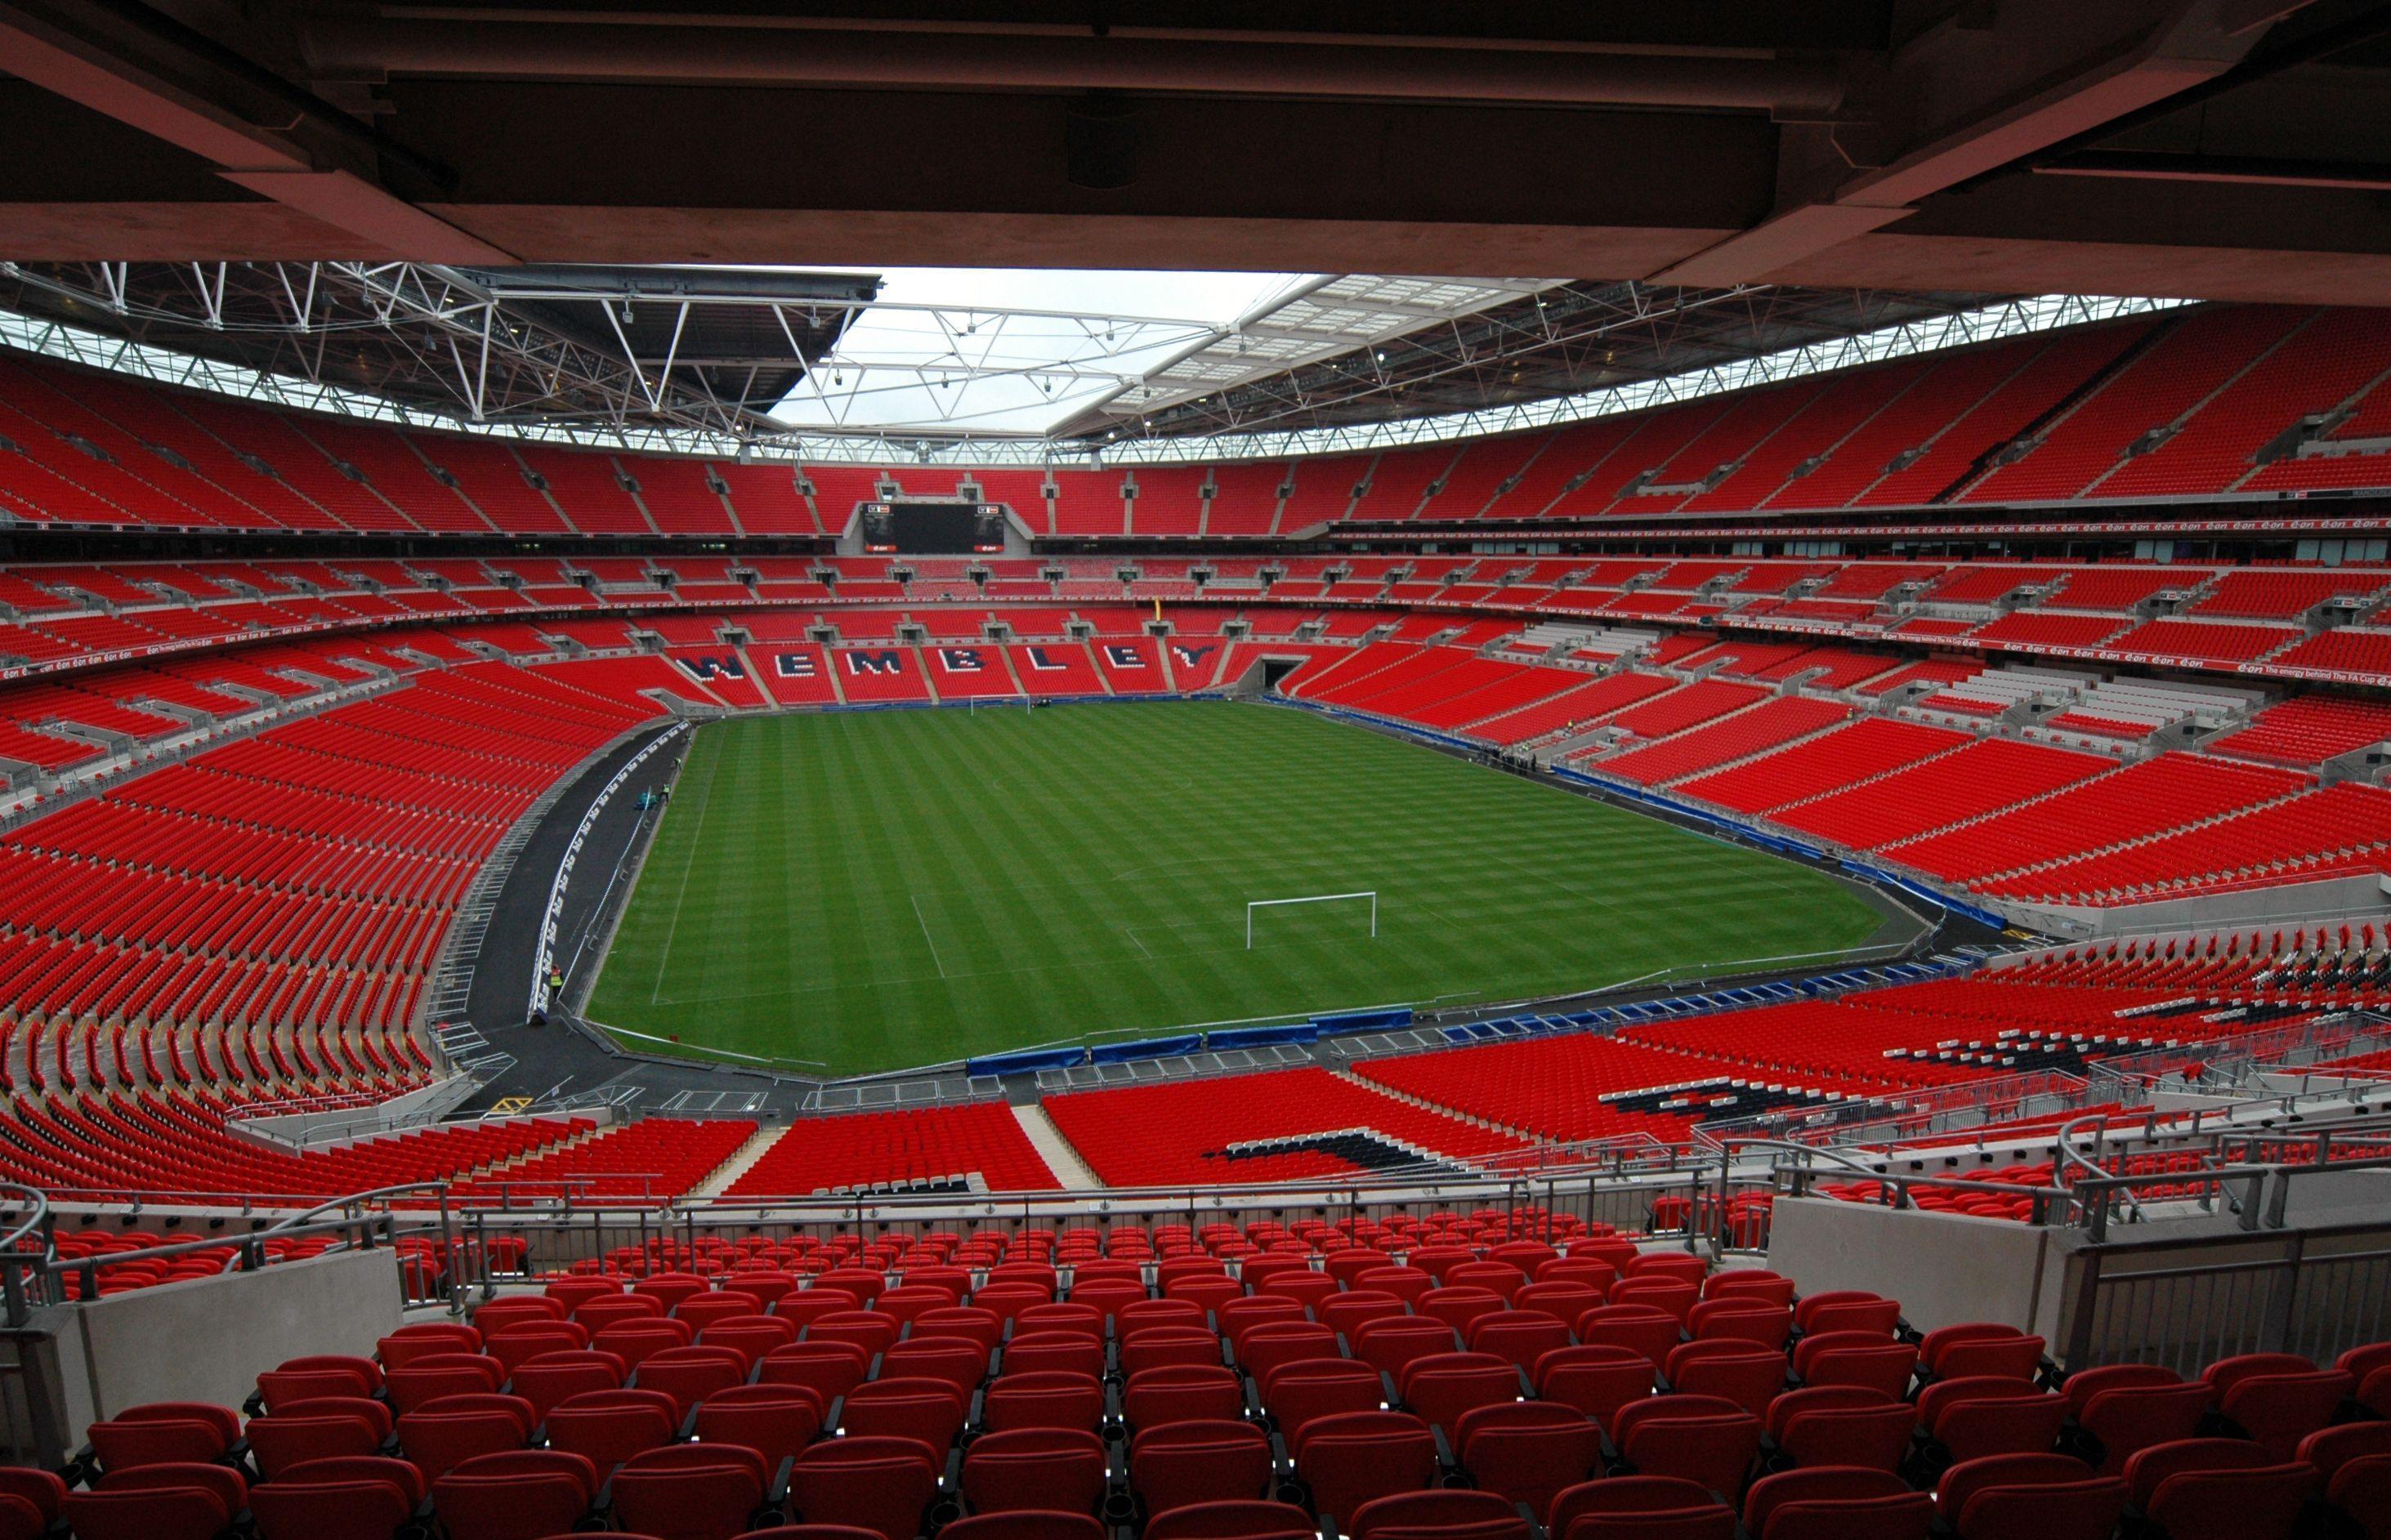 Wembley Stadium in Wembley, Greater London. World stadiums